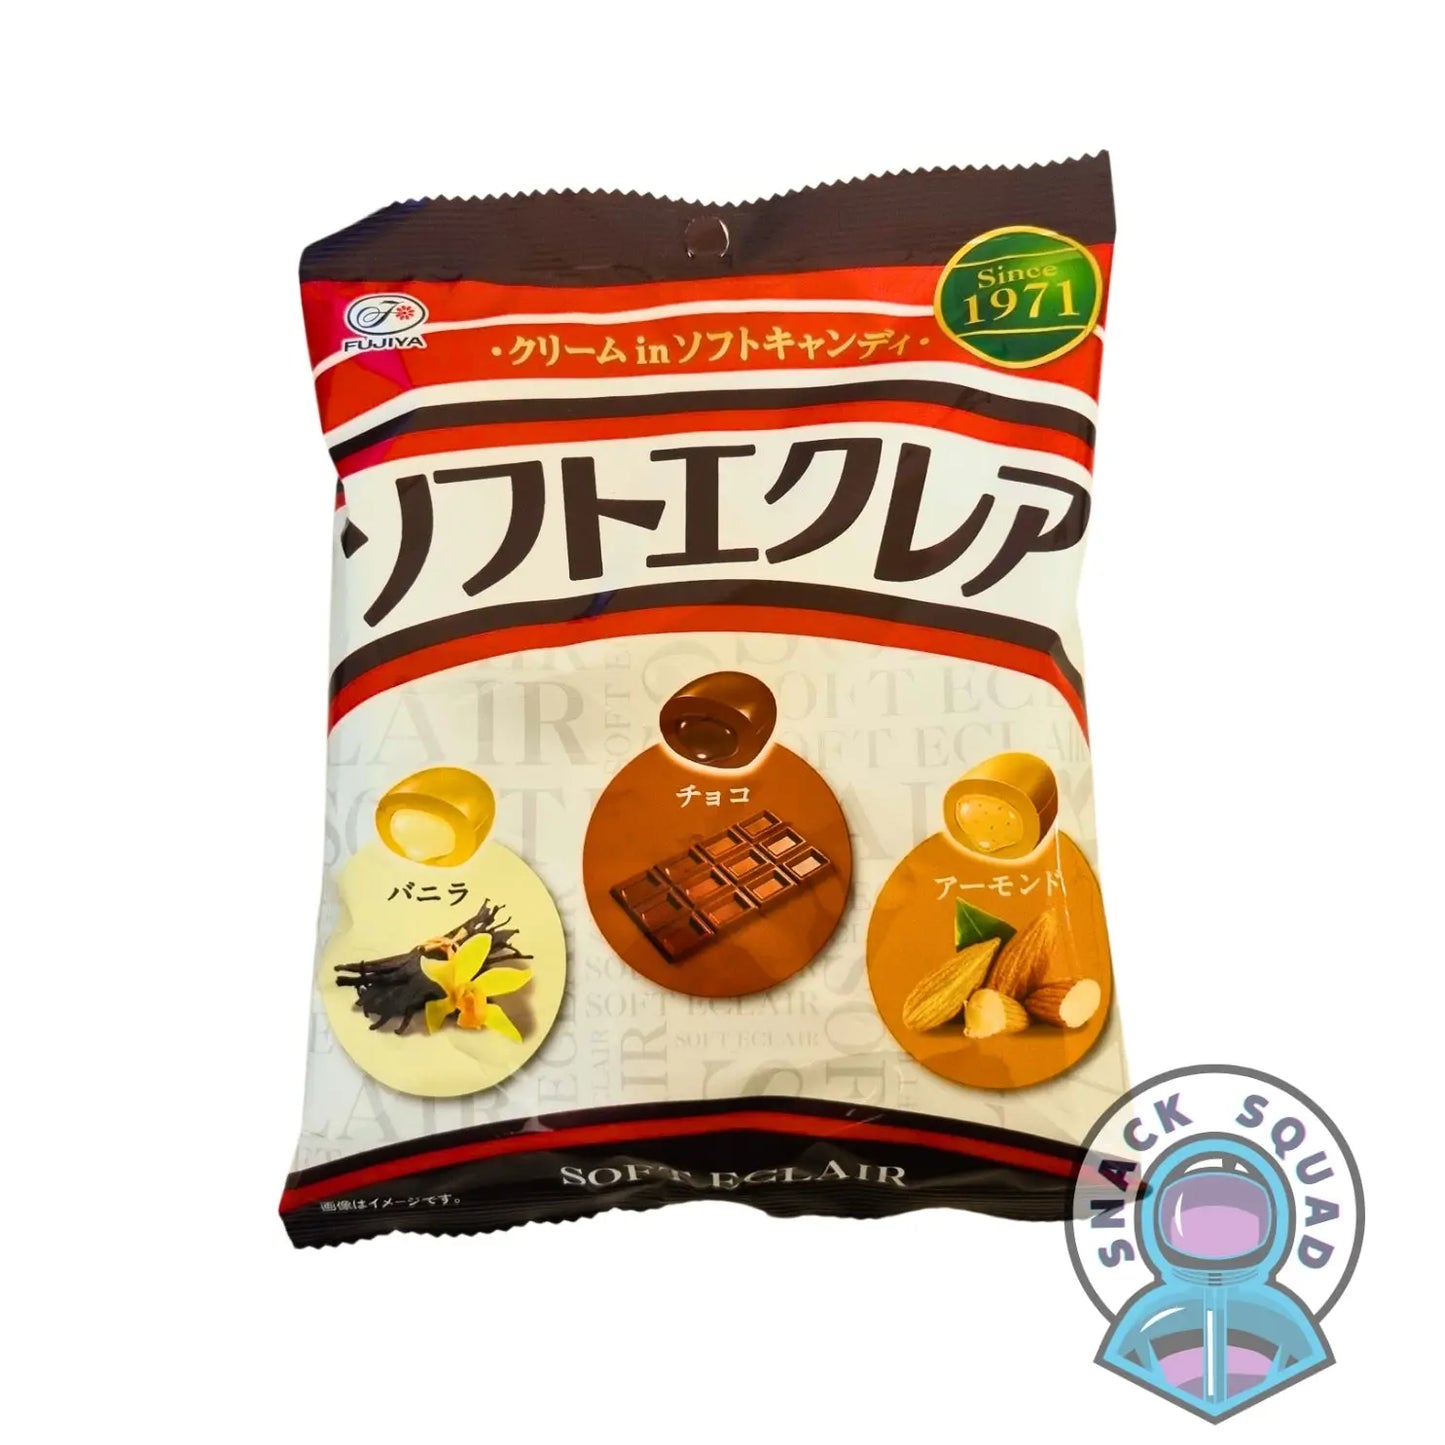 Fujiya Soft Éclair Vanilla Cream Caramel 93g (Japan) Snack Squad